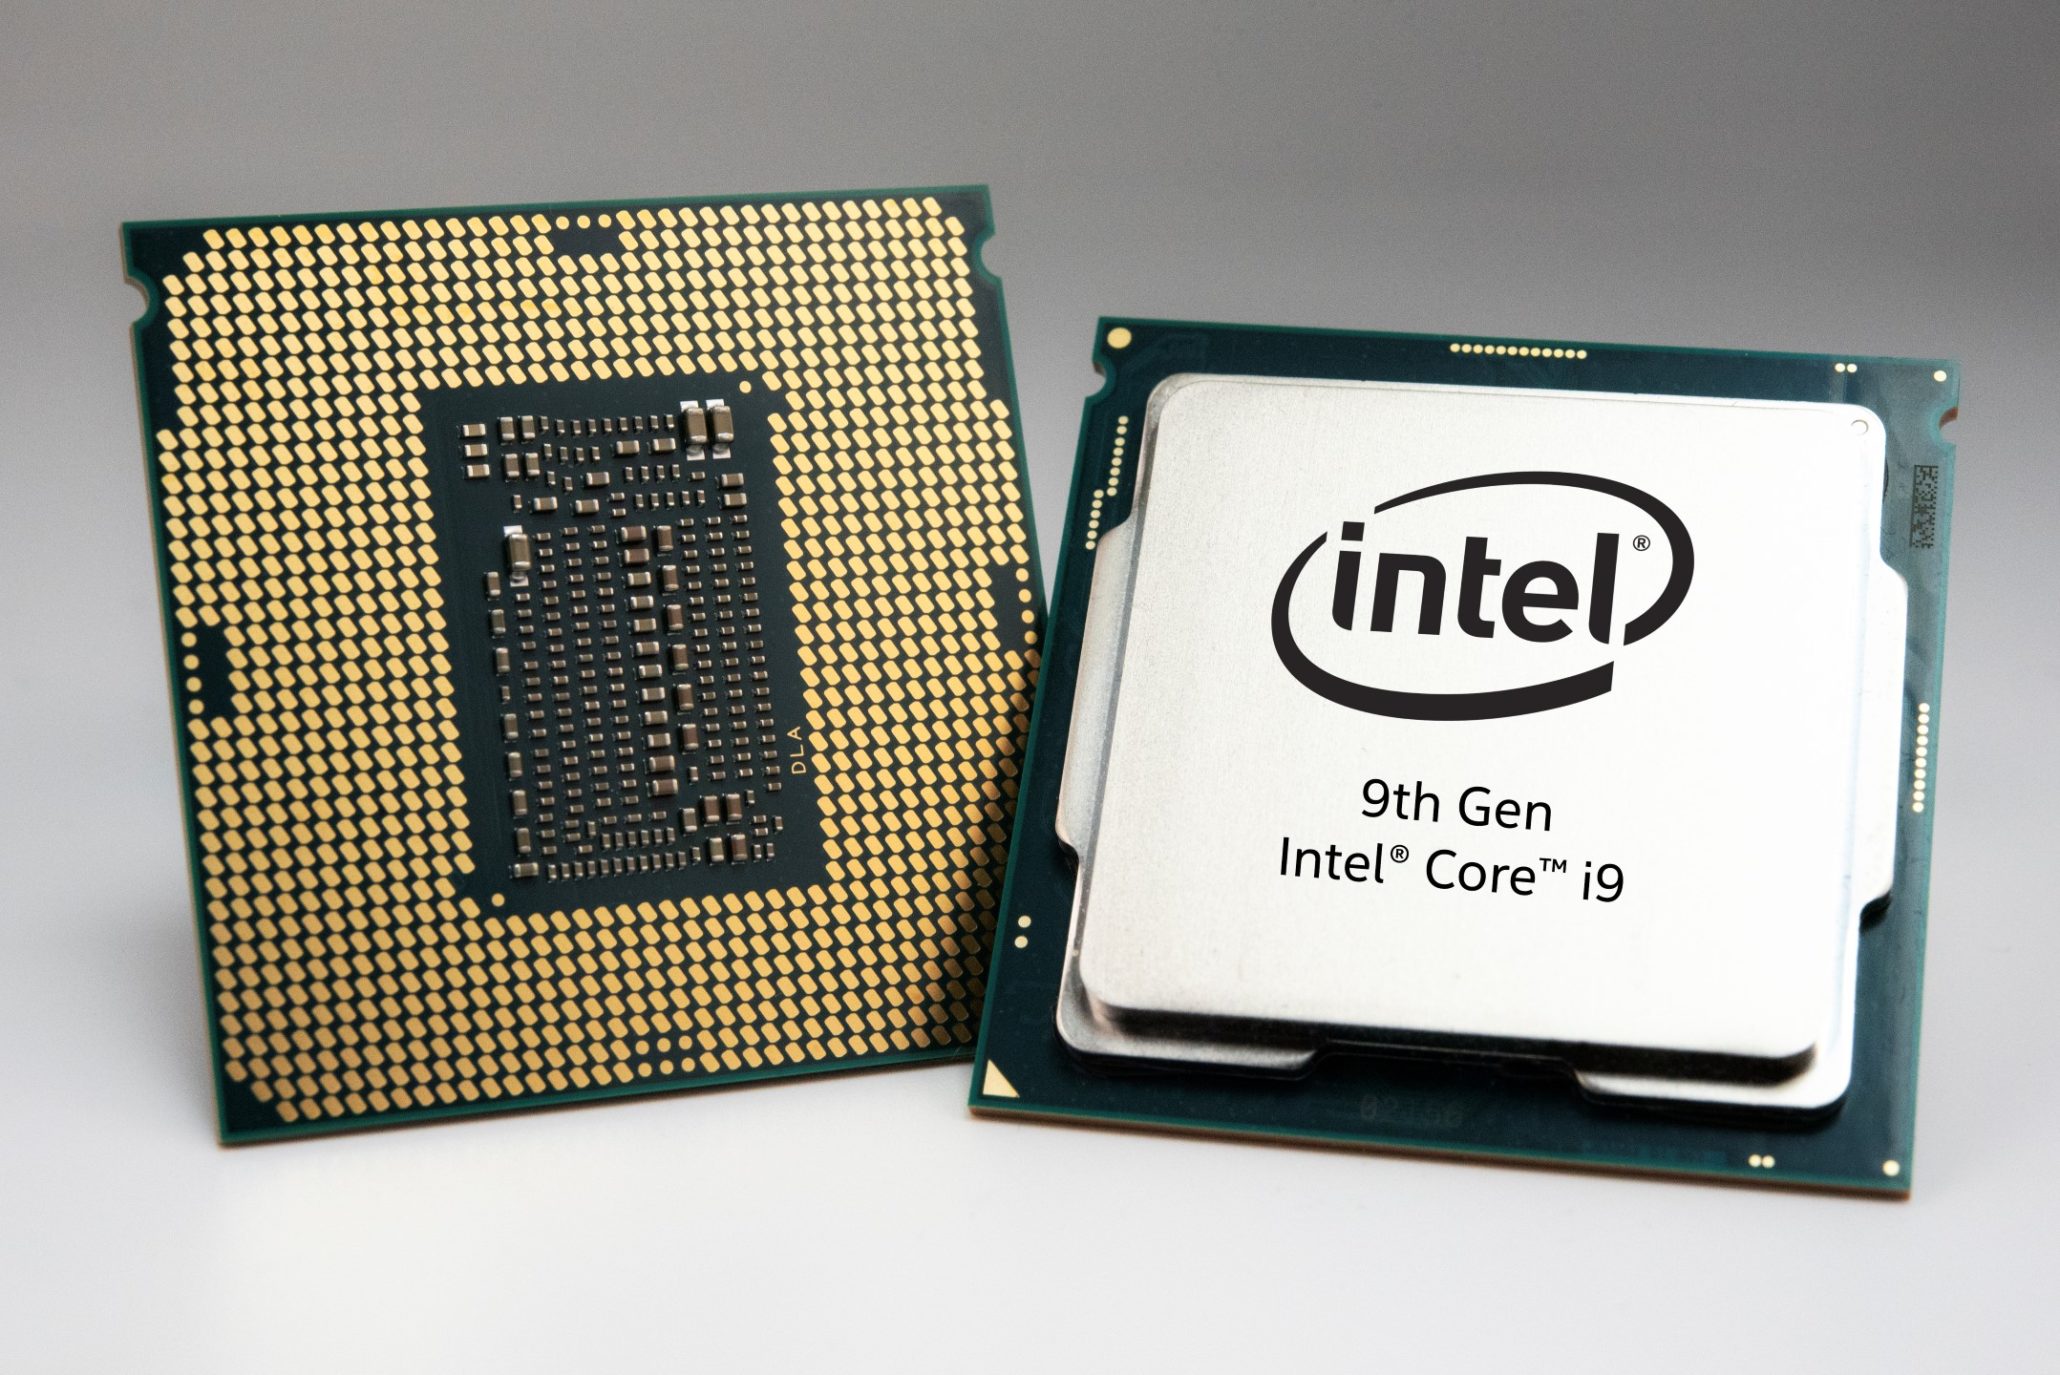  Intel Core i9 for video editing purposes